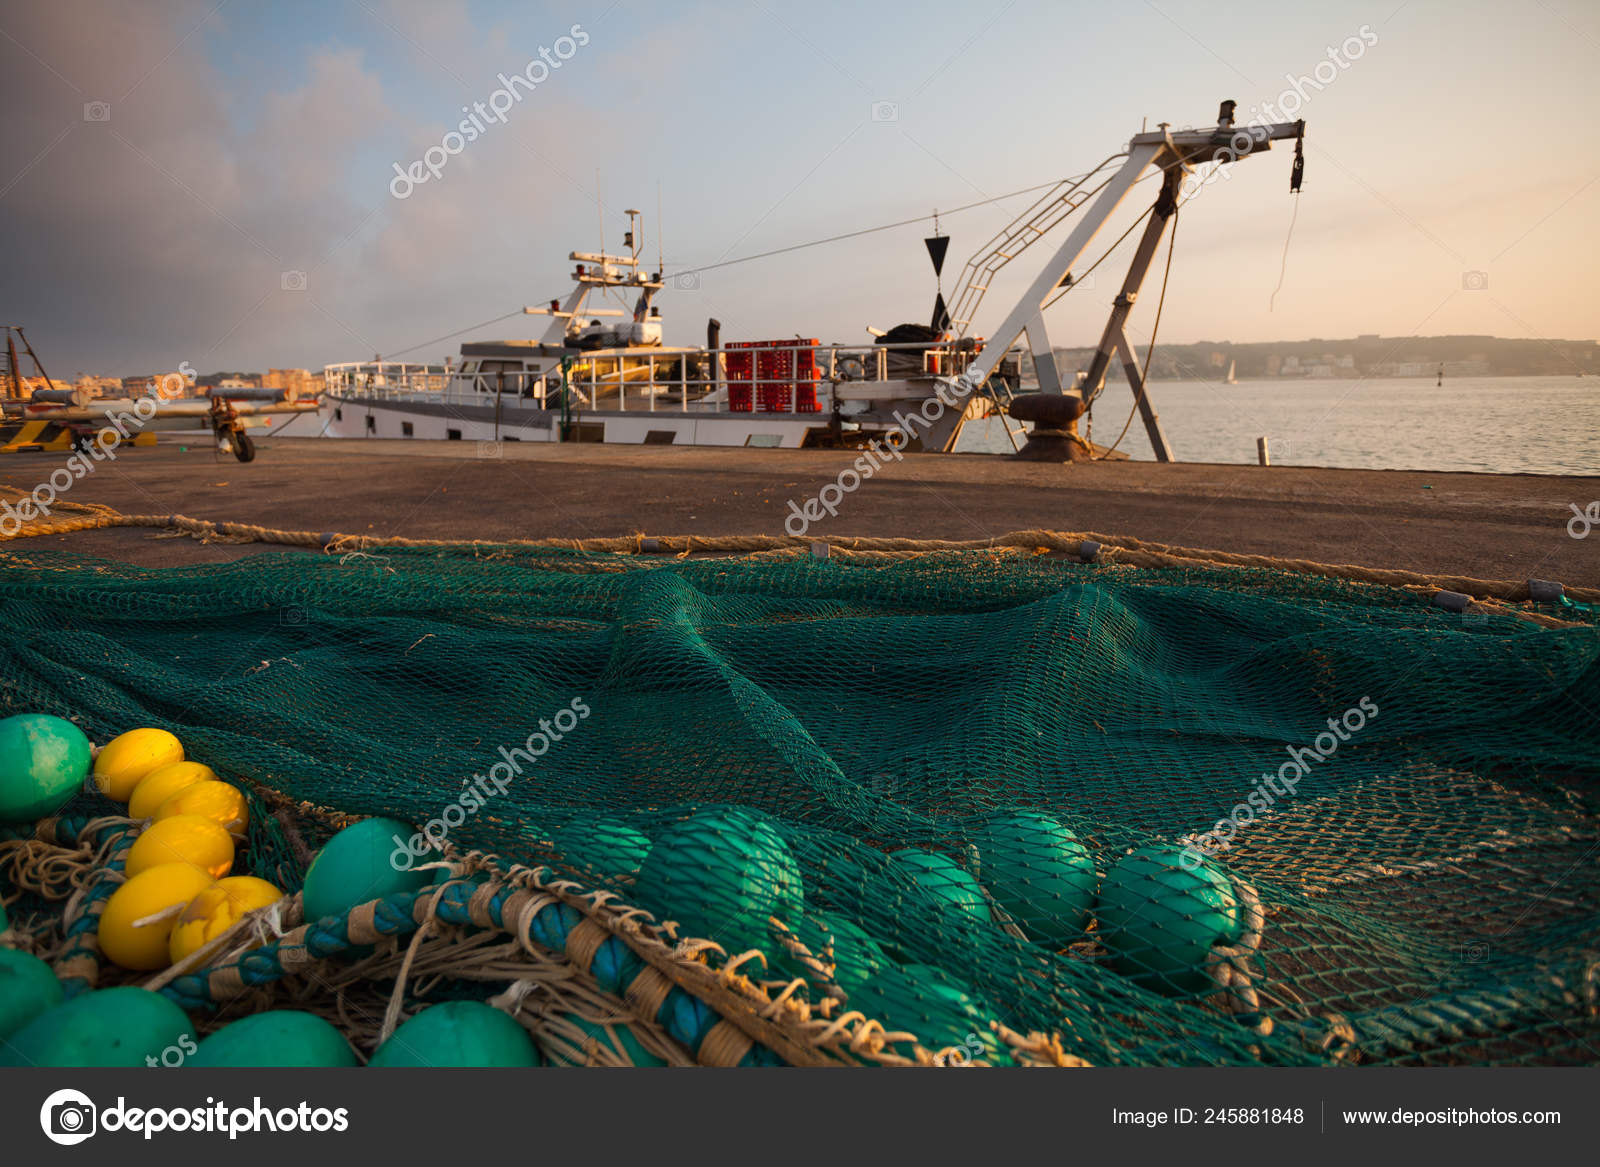 https://st4.depositphotos.com/1552575/24588/i/1600/depositphotos_245881848-stock-photo-view-fishing-net-front-boat.jpg